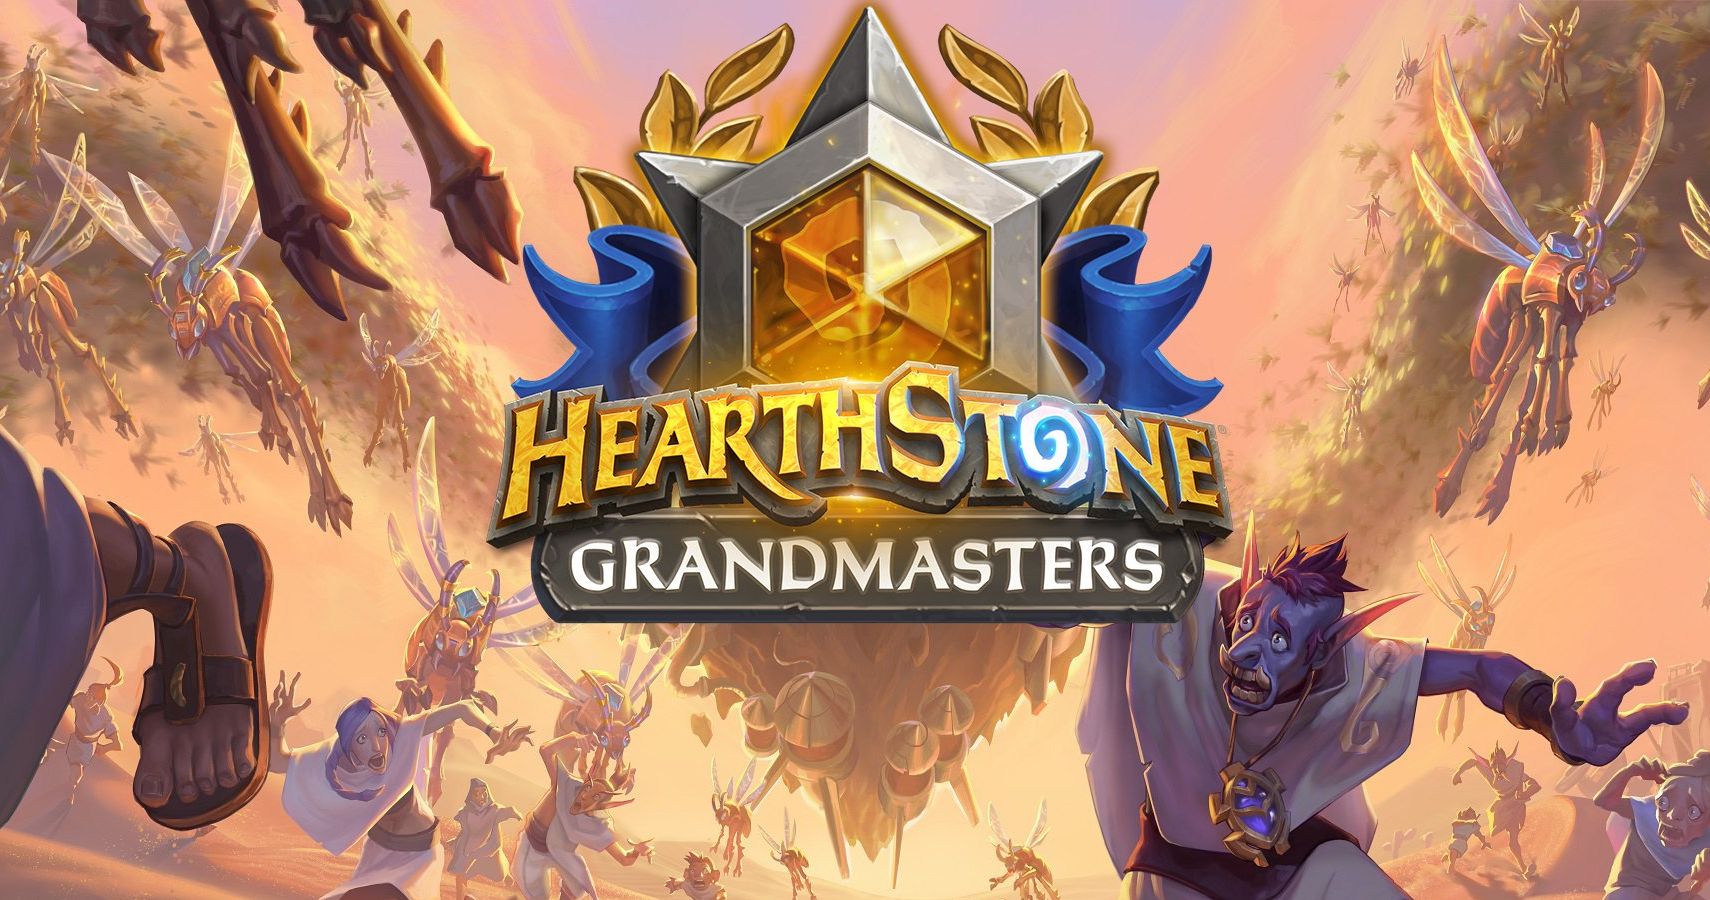 Hearthstone Grandmasters Is Almost Here! - Hearthstone